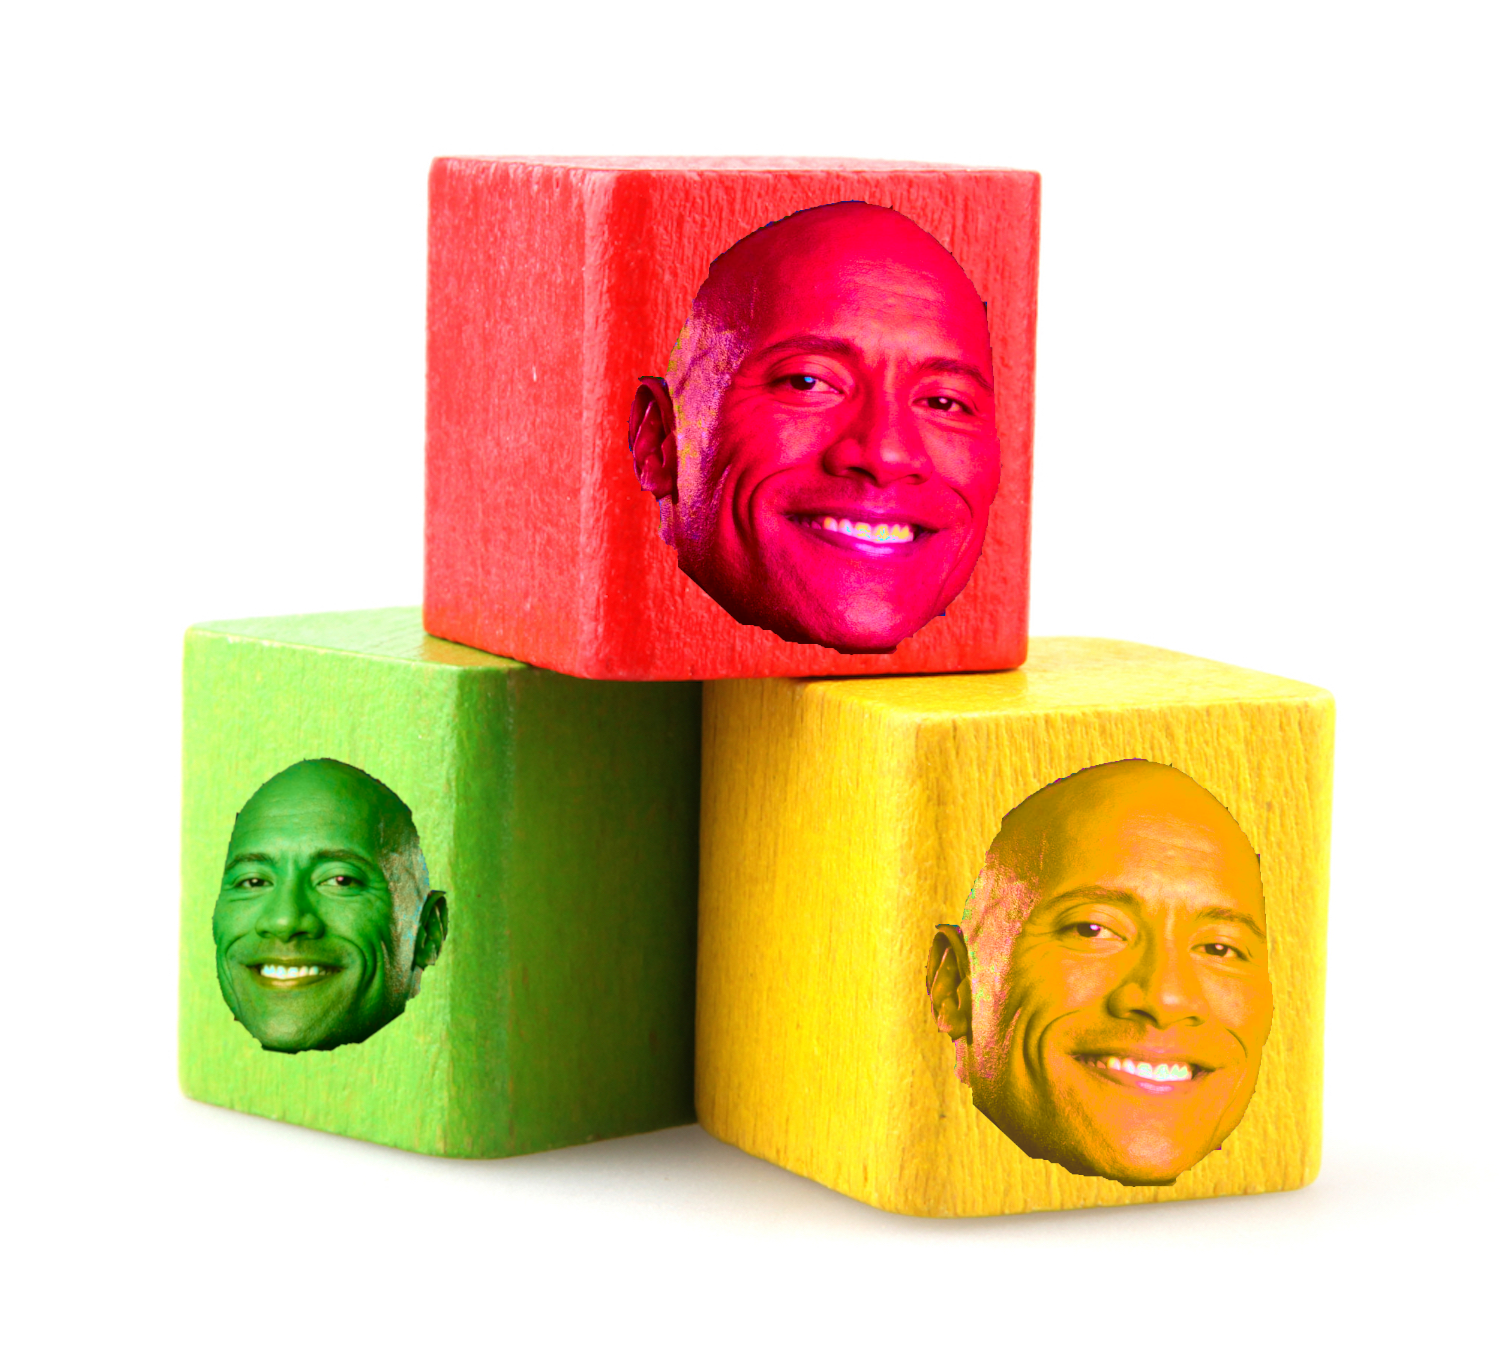 Dwayne "the Block" Johnson